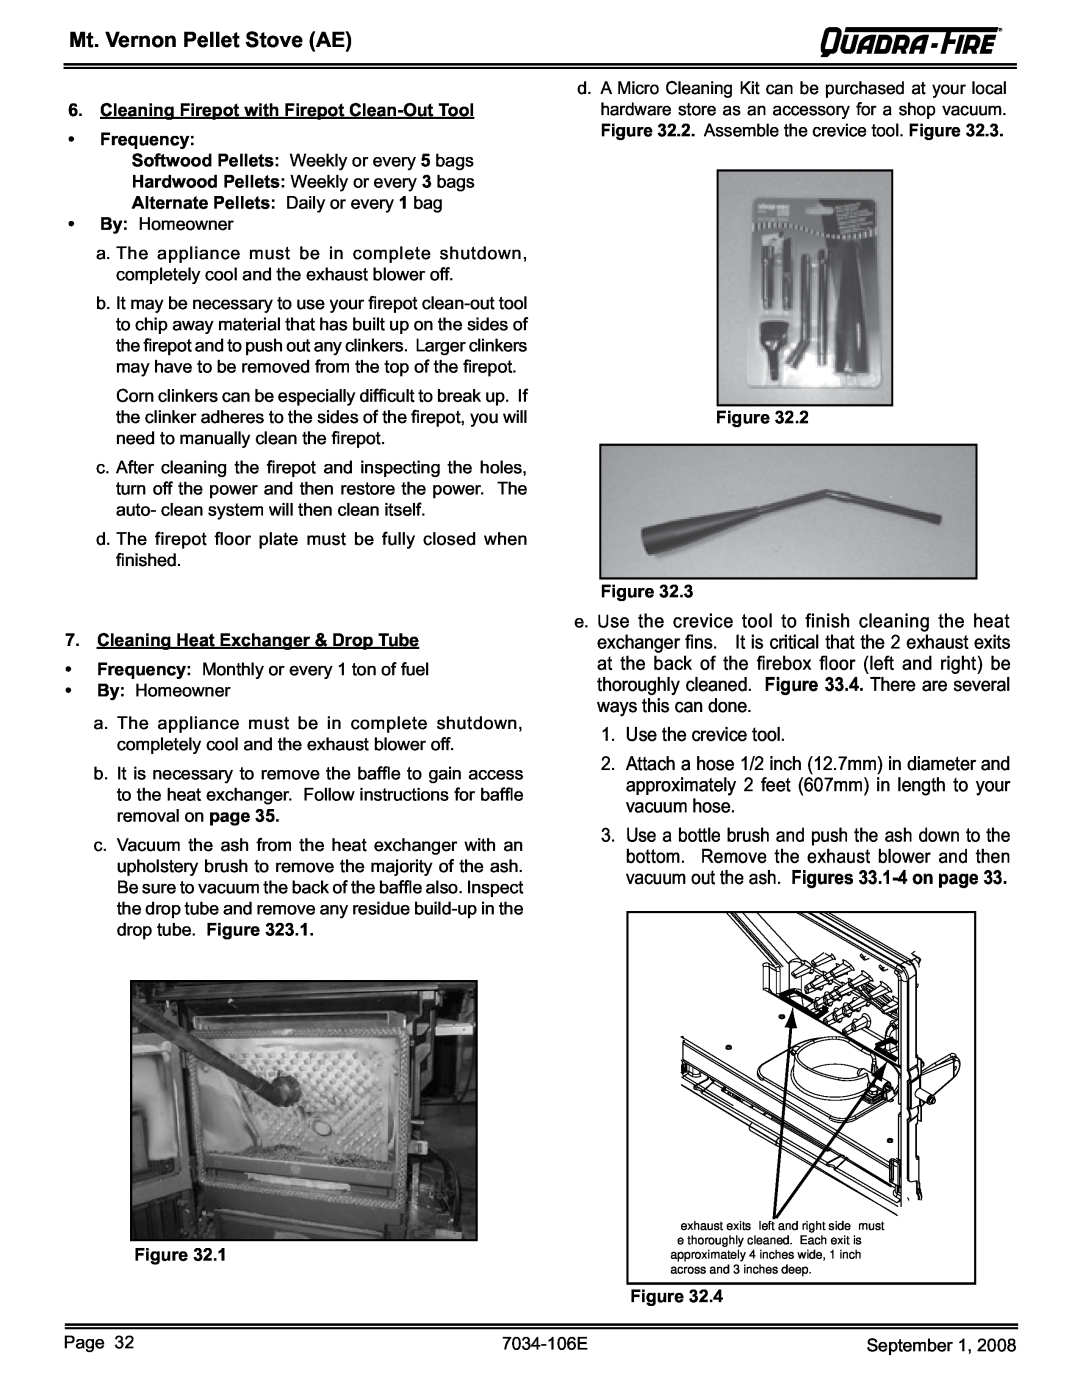 Quadra-Fire MTVERNON-AE-PMH, MTVERNON-AE-MBK, MTVERNON-AE-CWL owner manual Mt. Vernon Pellet Stove AE, Use the crevice tool 